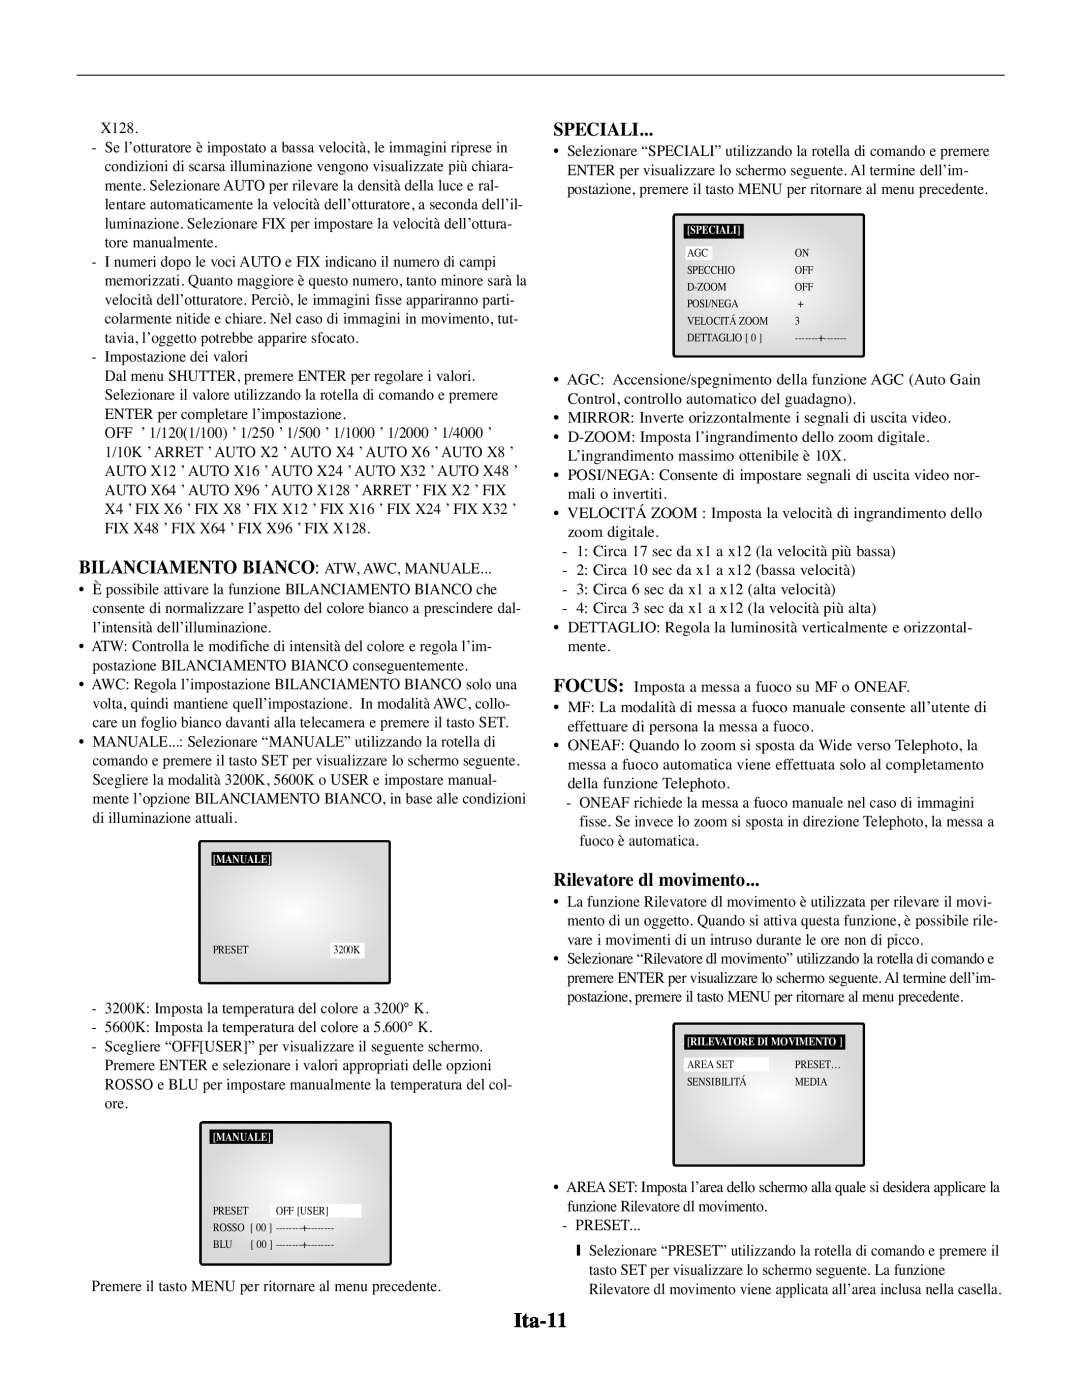 Samsung SMO-210MP/UMG, SMO-210TRP manual Ita-11, Bilanciamento Bianco Atw, Awc, Manuale, Speciali, Rilevatore dl movimento 